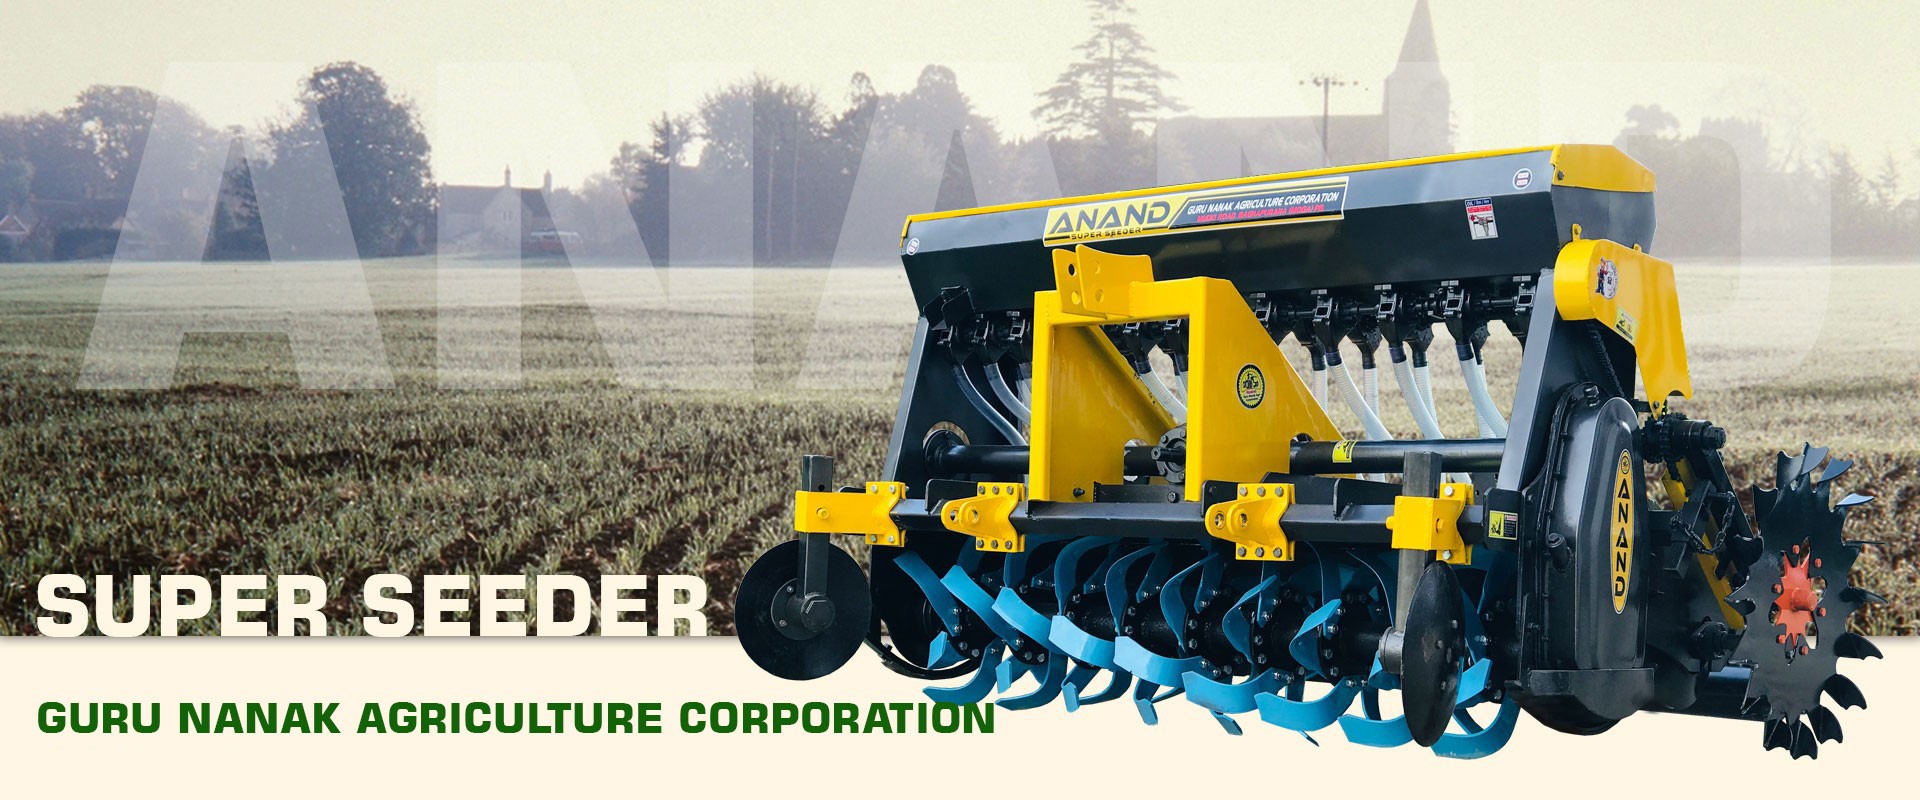 Super Seeder Manufacturer and Supplier in Punjab India - Guru Nanak Agriculture Corporation